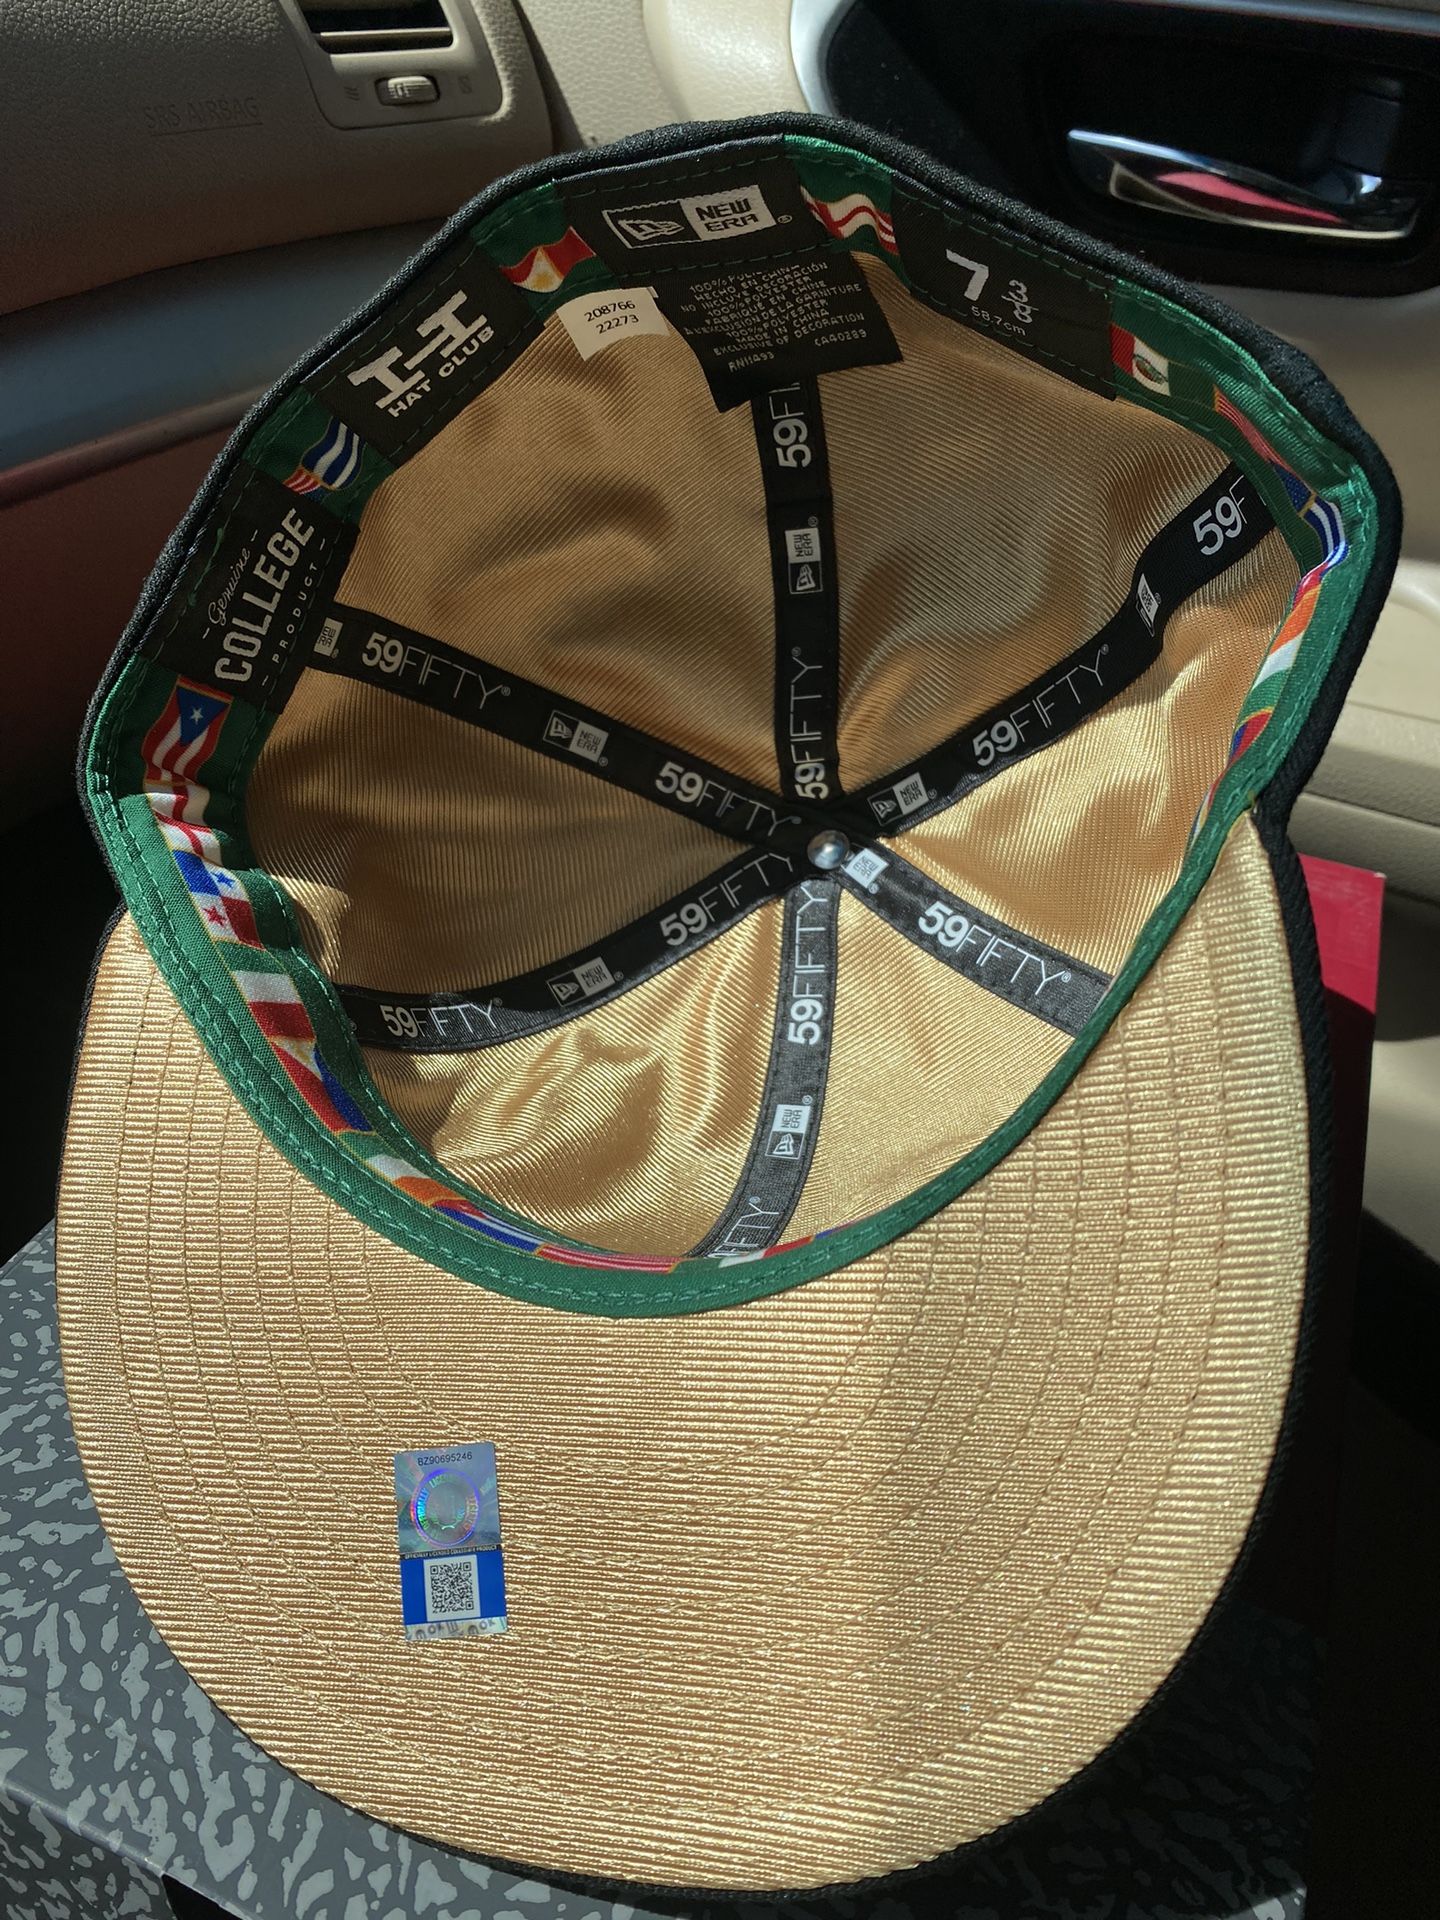 New Era KC Royals City Connect Hat 7 1/8 for Sale in Glendale, AZ - OfferUp